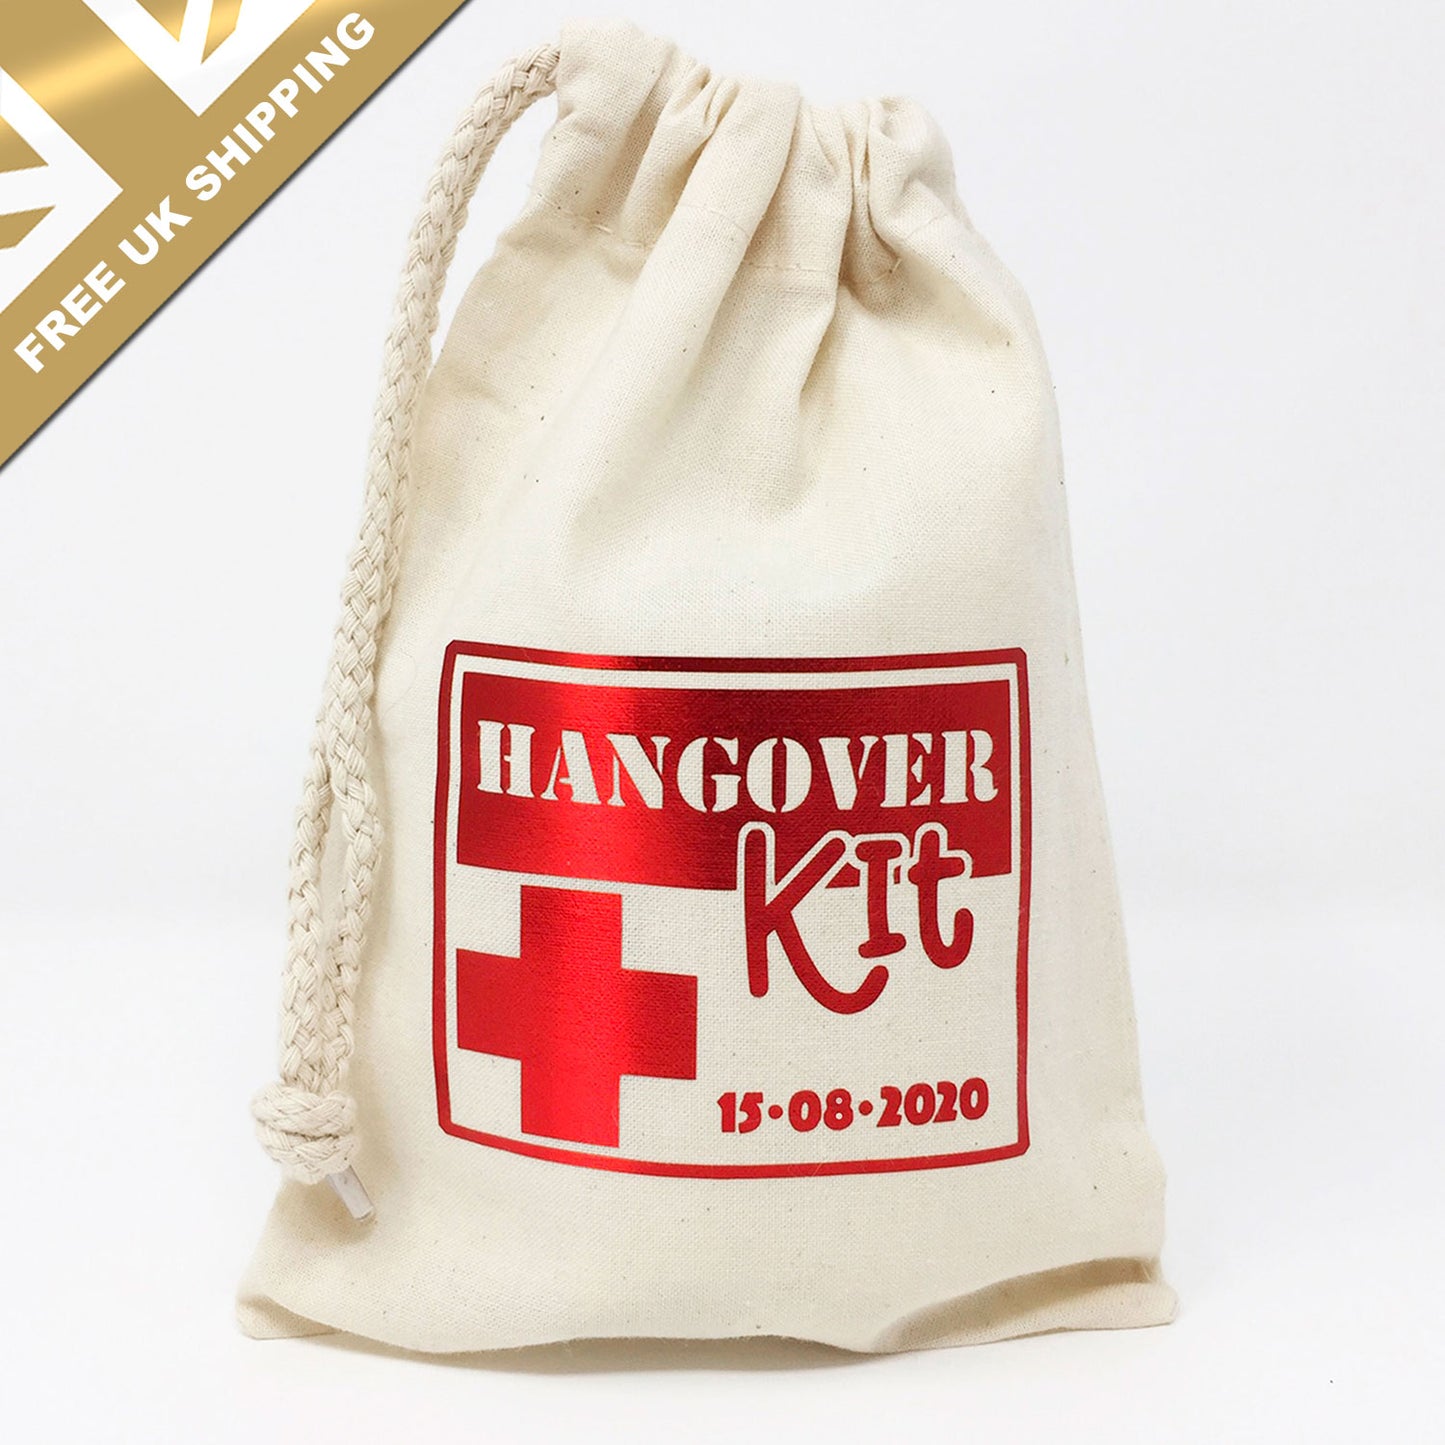 Hangover Kit Bag - FREE UK SHIPPING